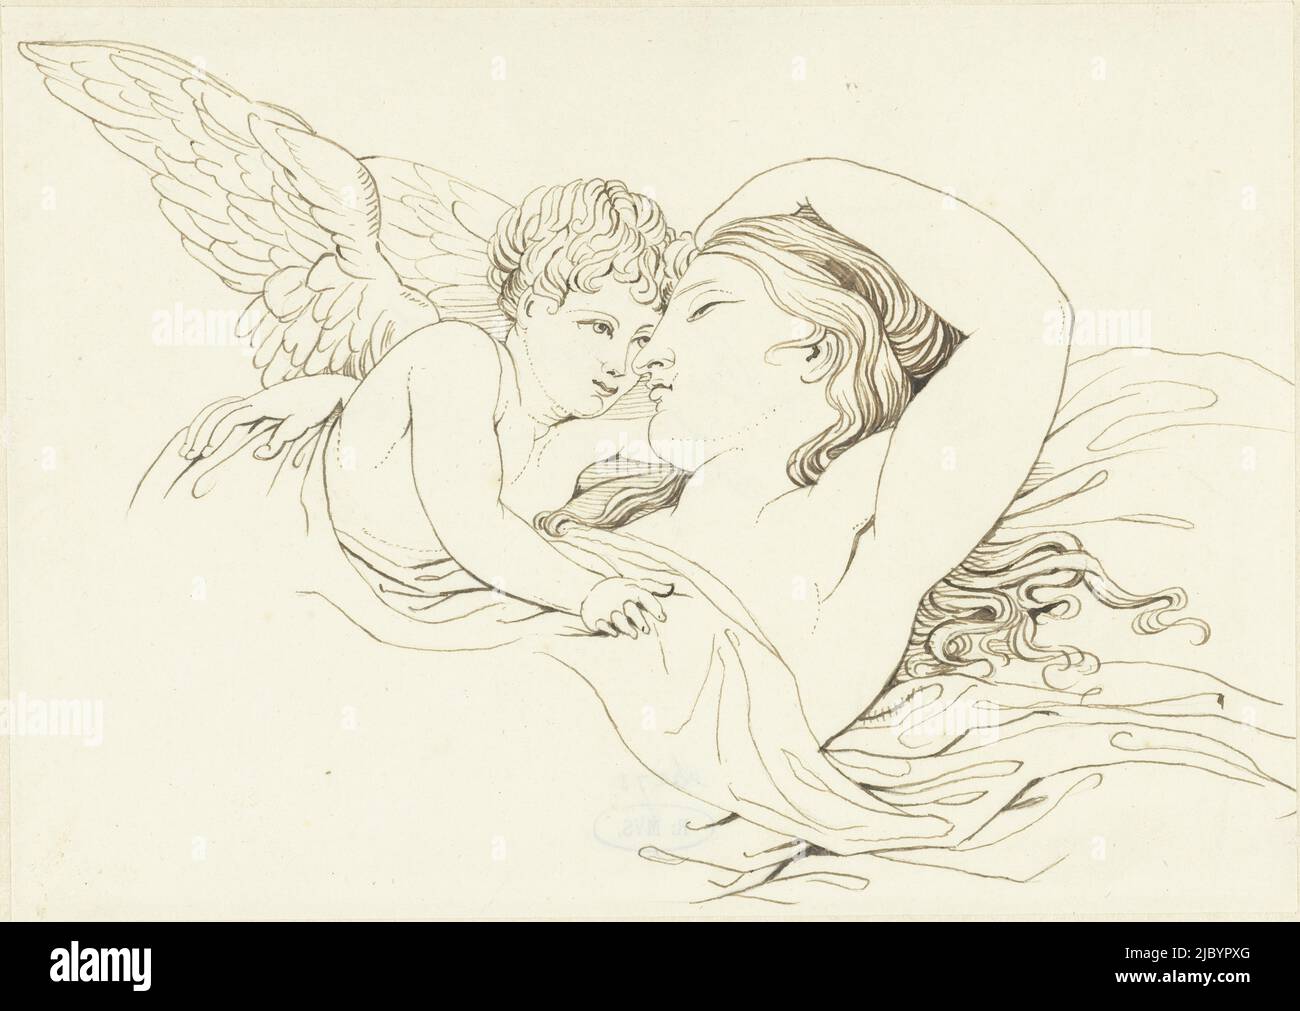 Reclining Venus with Cupid, David Pièrre Giottino Humbert de Superville, 1780 - 1849, draughtsman: David Pièrre Giottino Humbert de Superville, 1780 - 1849, paper, pen, h 142 mm × w 200 mm Stock Photo